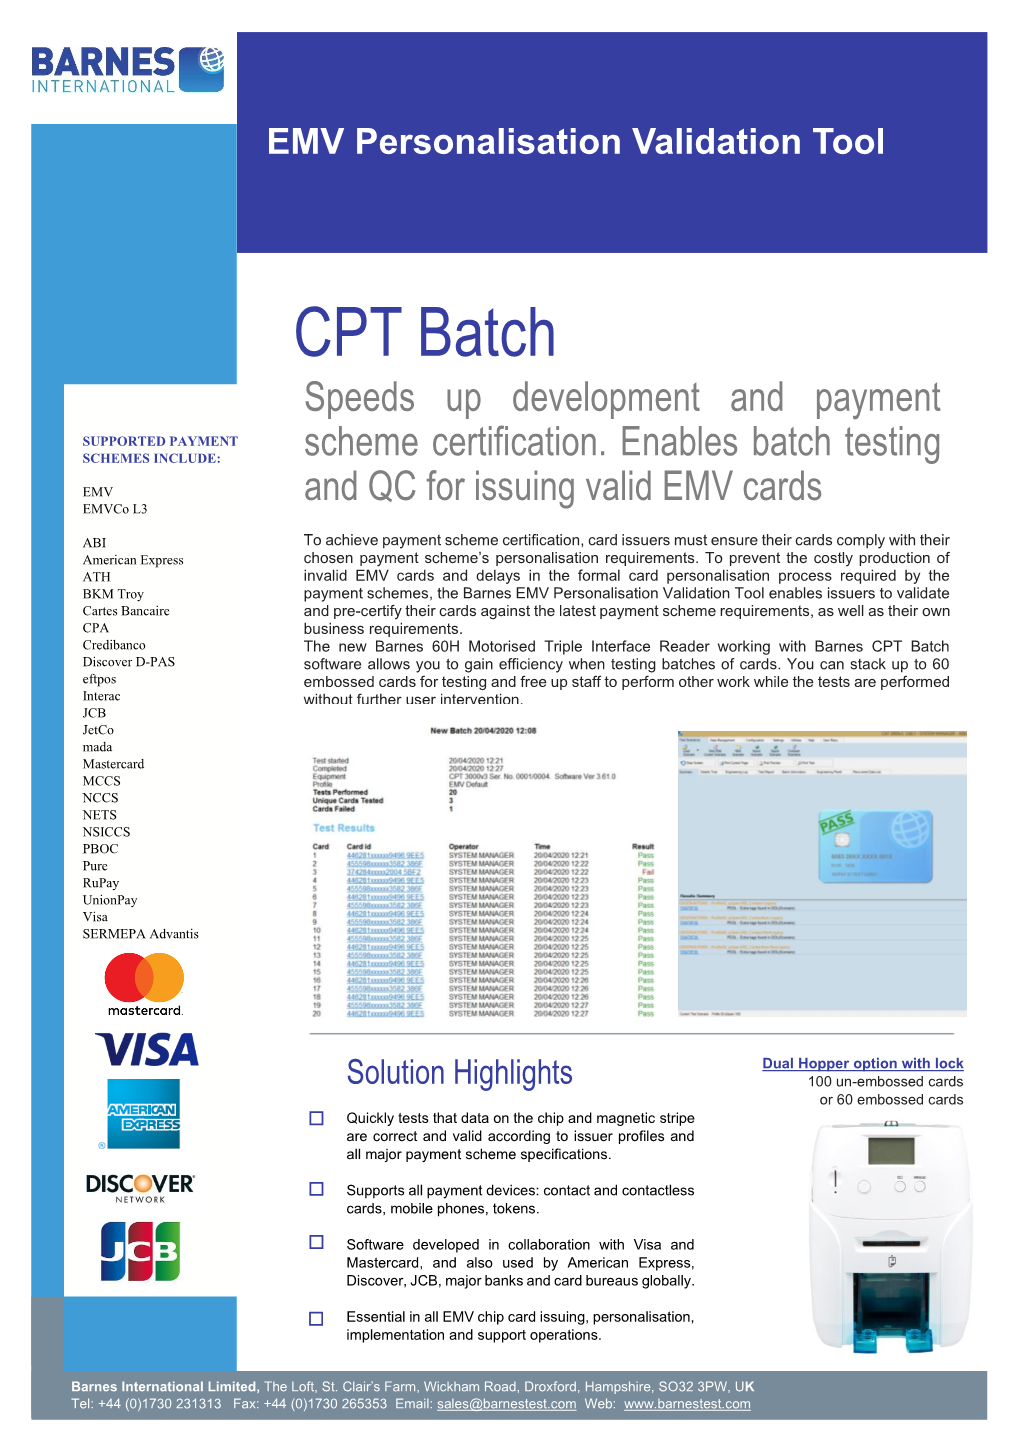 CPT Batch Speeds up Development and Payment